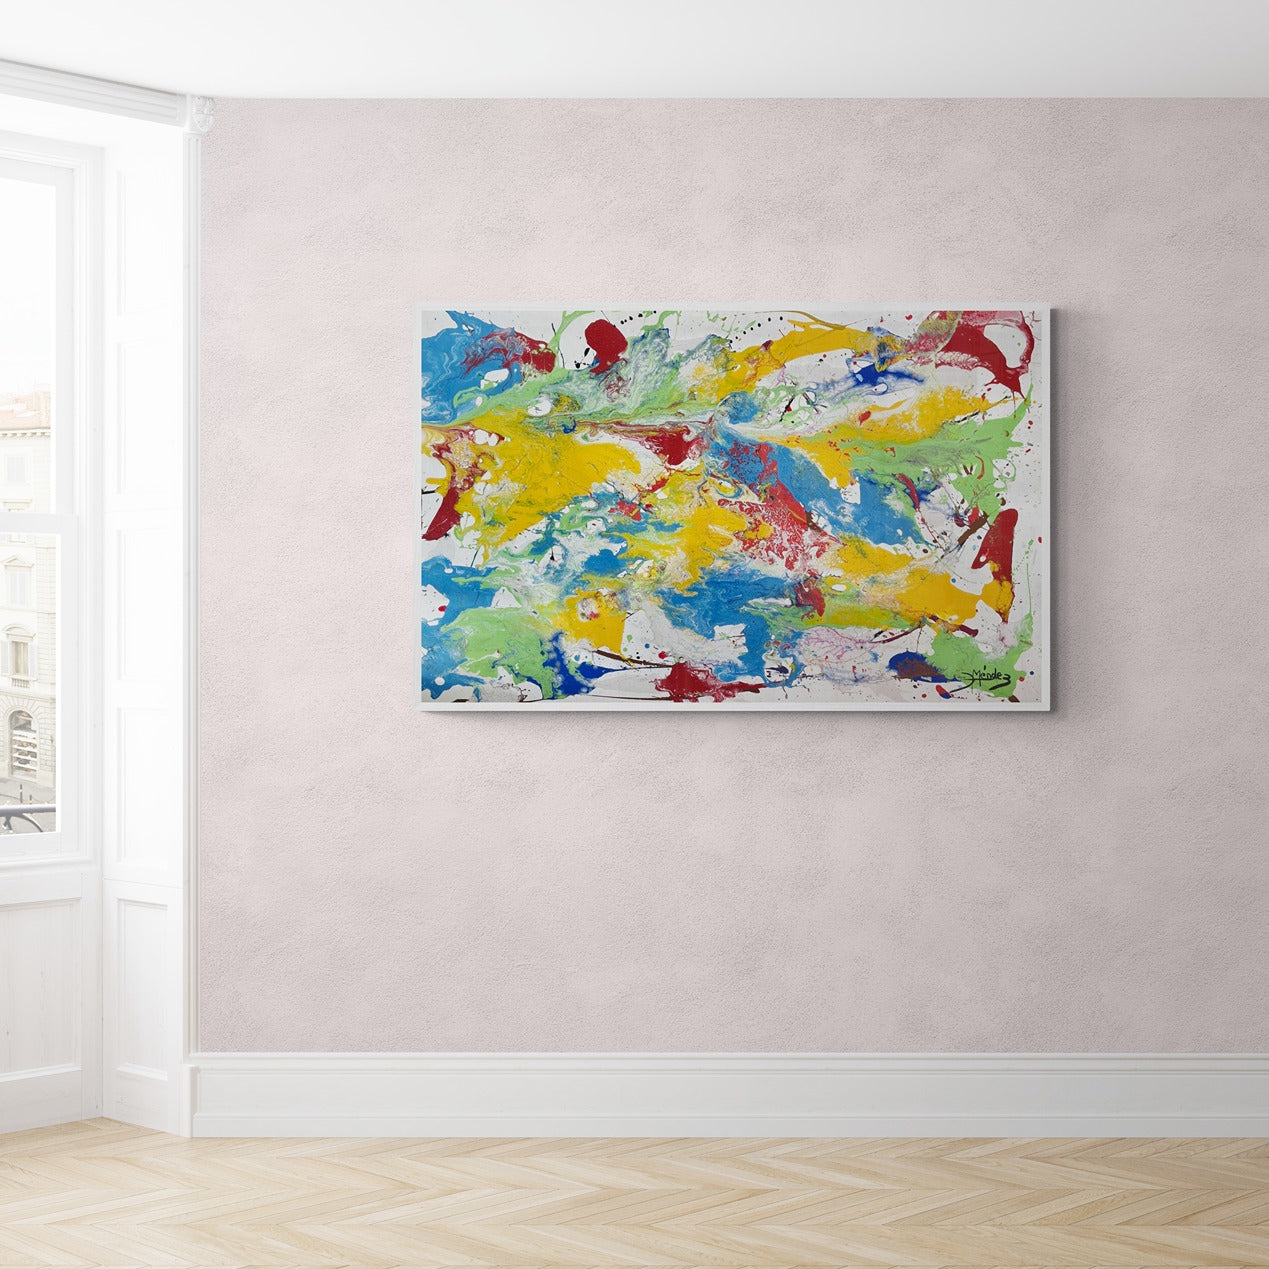 "Vivid Vibrations" Large Original Hand-Painted Canvas Wall Art 56" x 37"